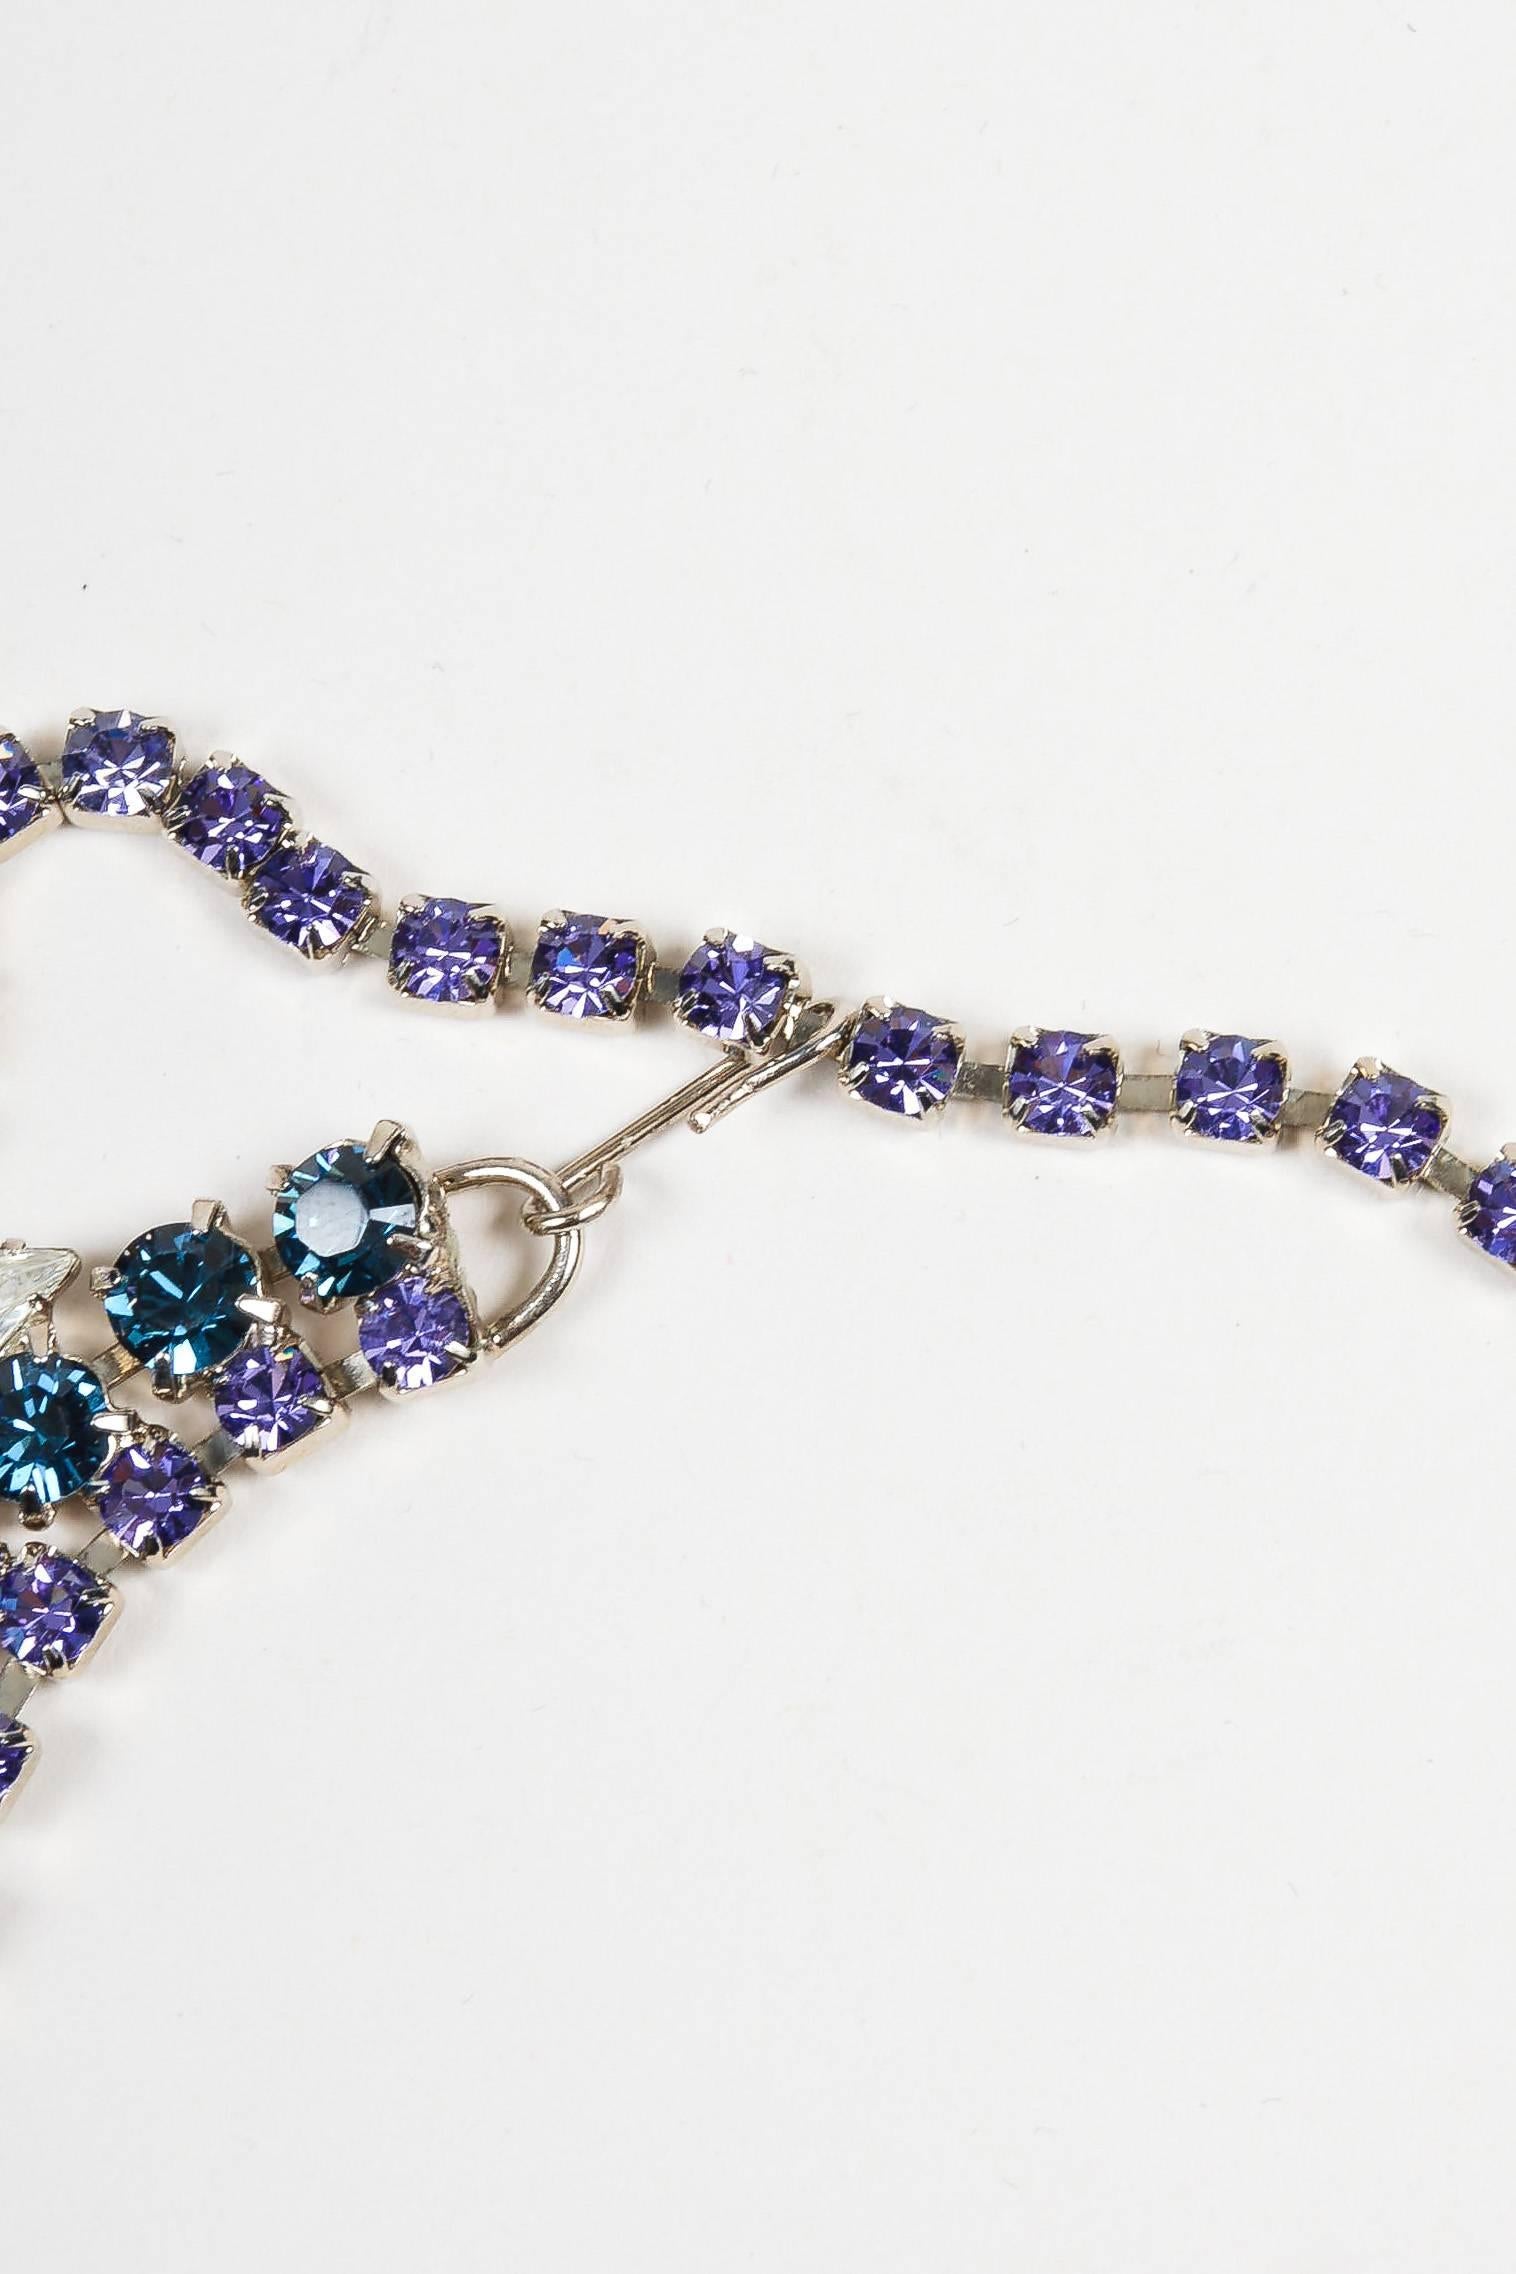 Thorin & Co Purple Navy Clear Rhinestone Gem Embellished Oversized Bib Necklace For Sale 4